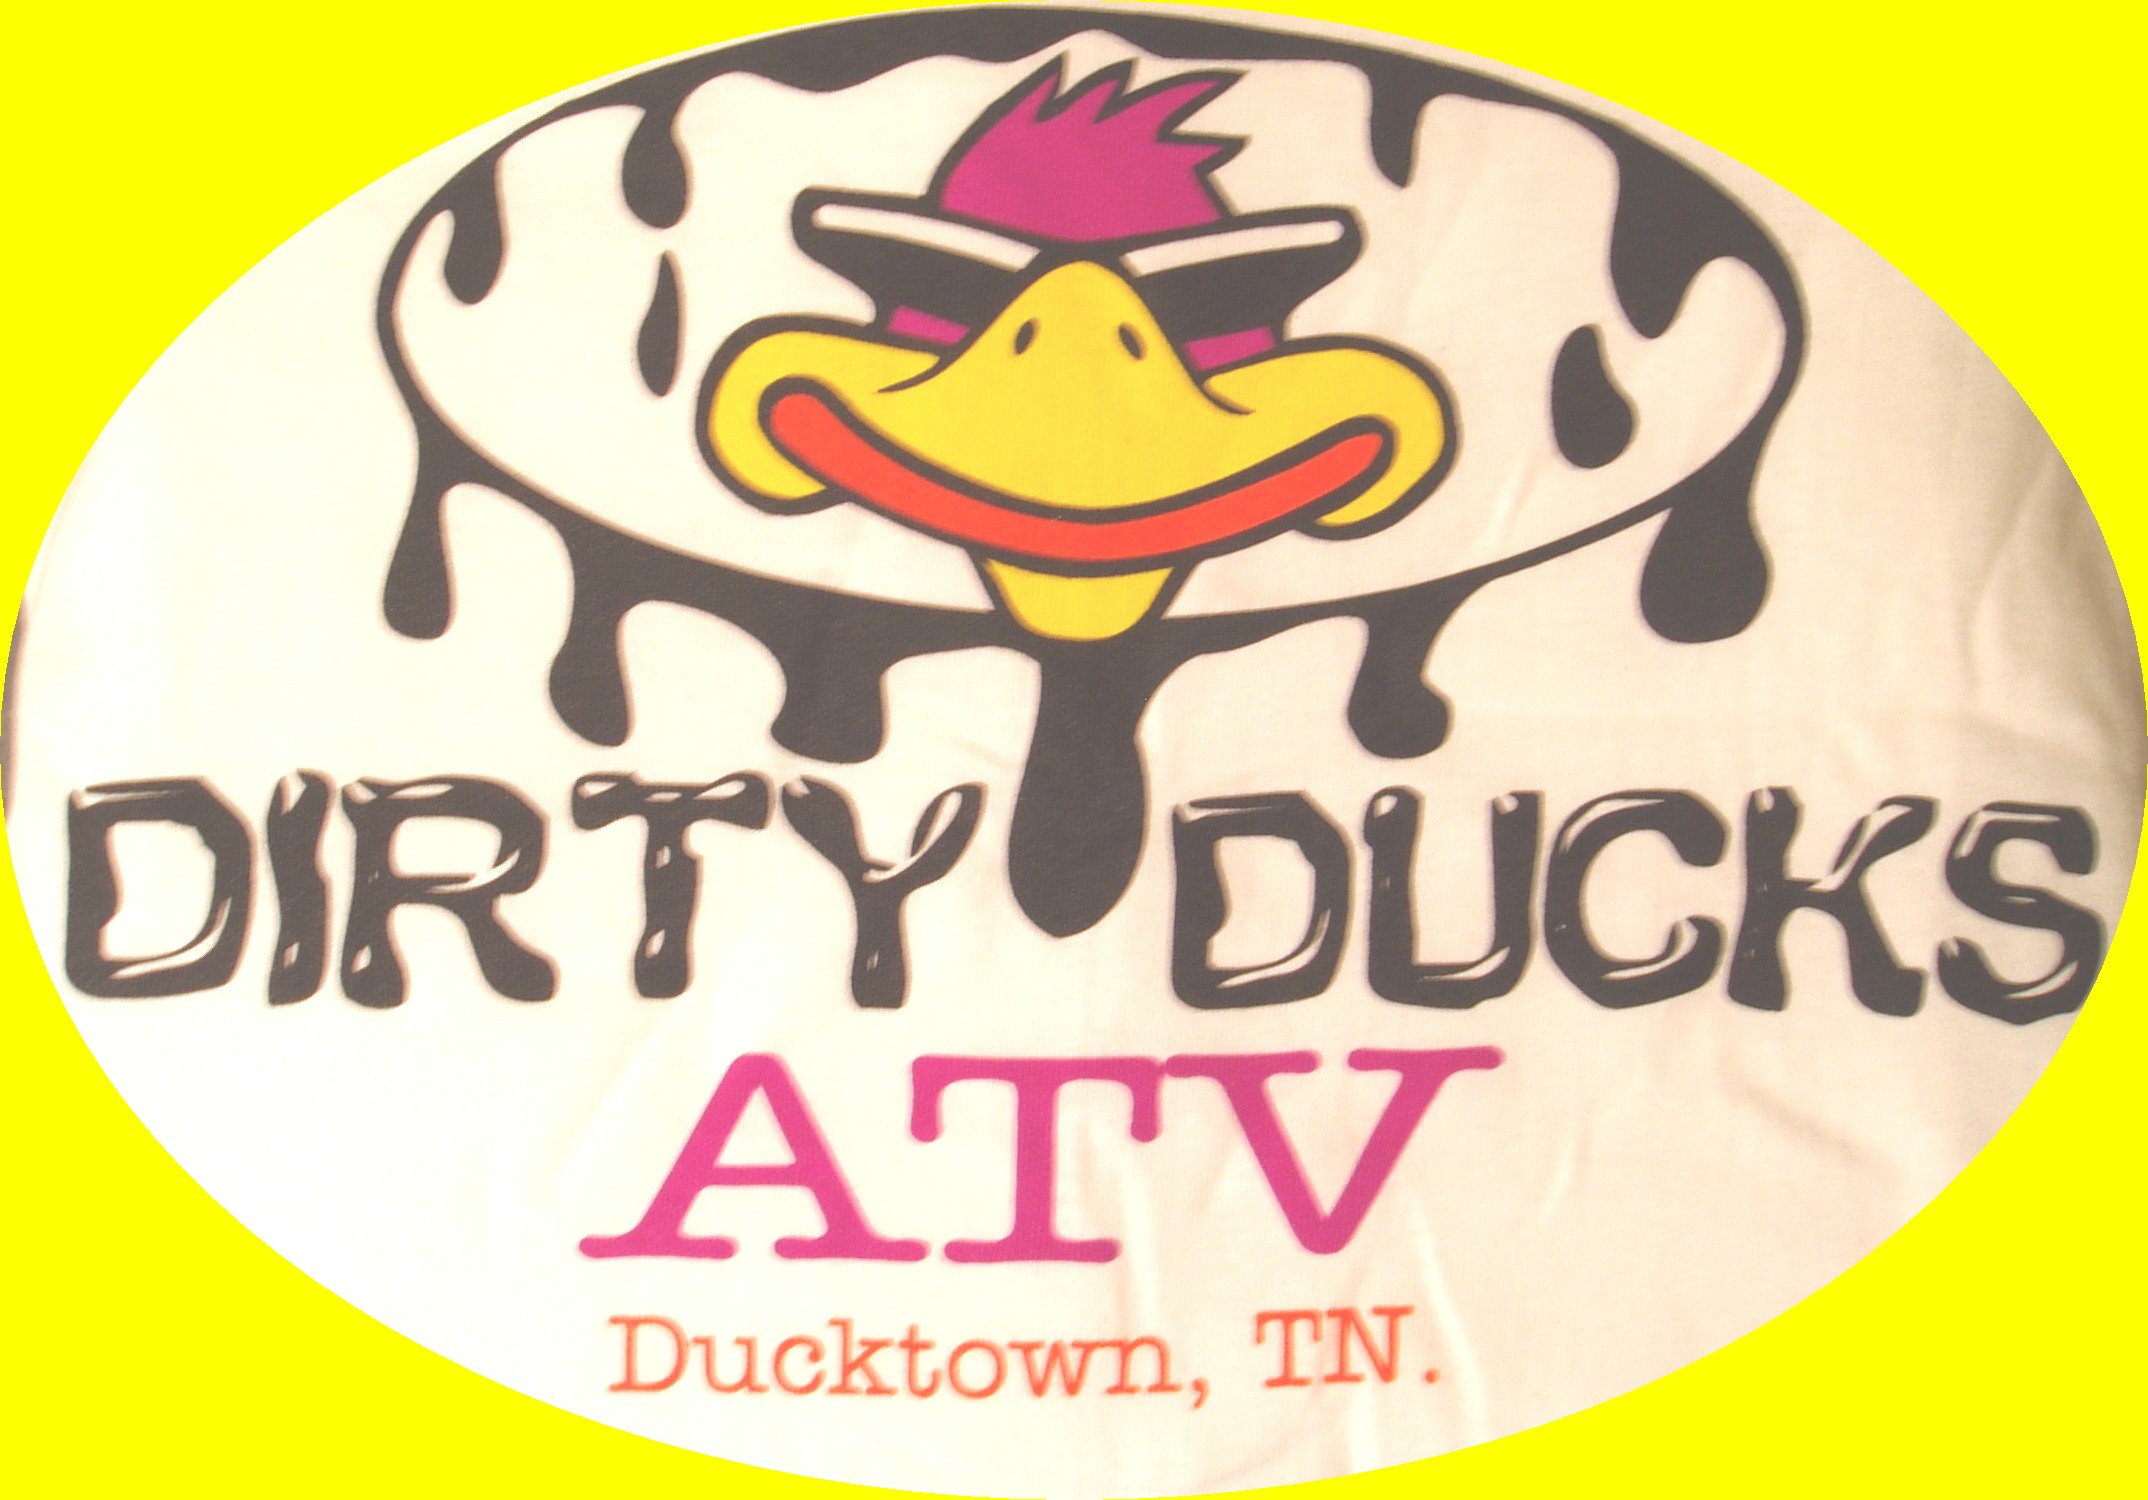 Link to Dirty Ducks ATV